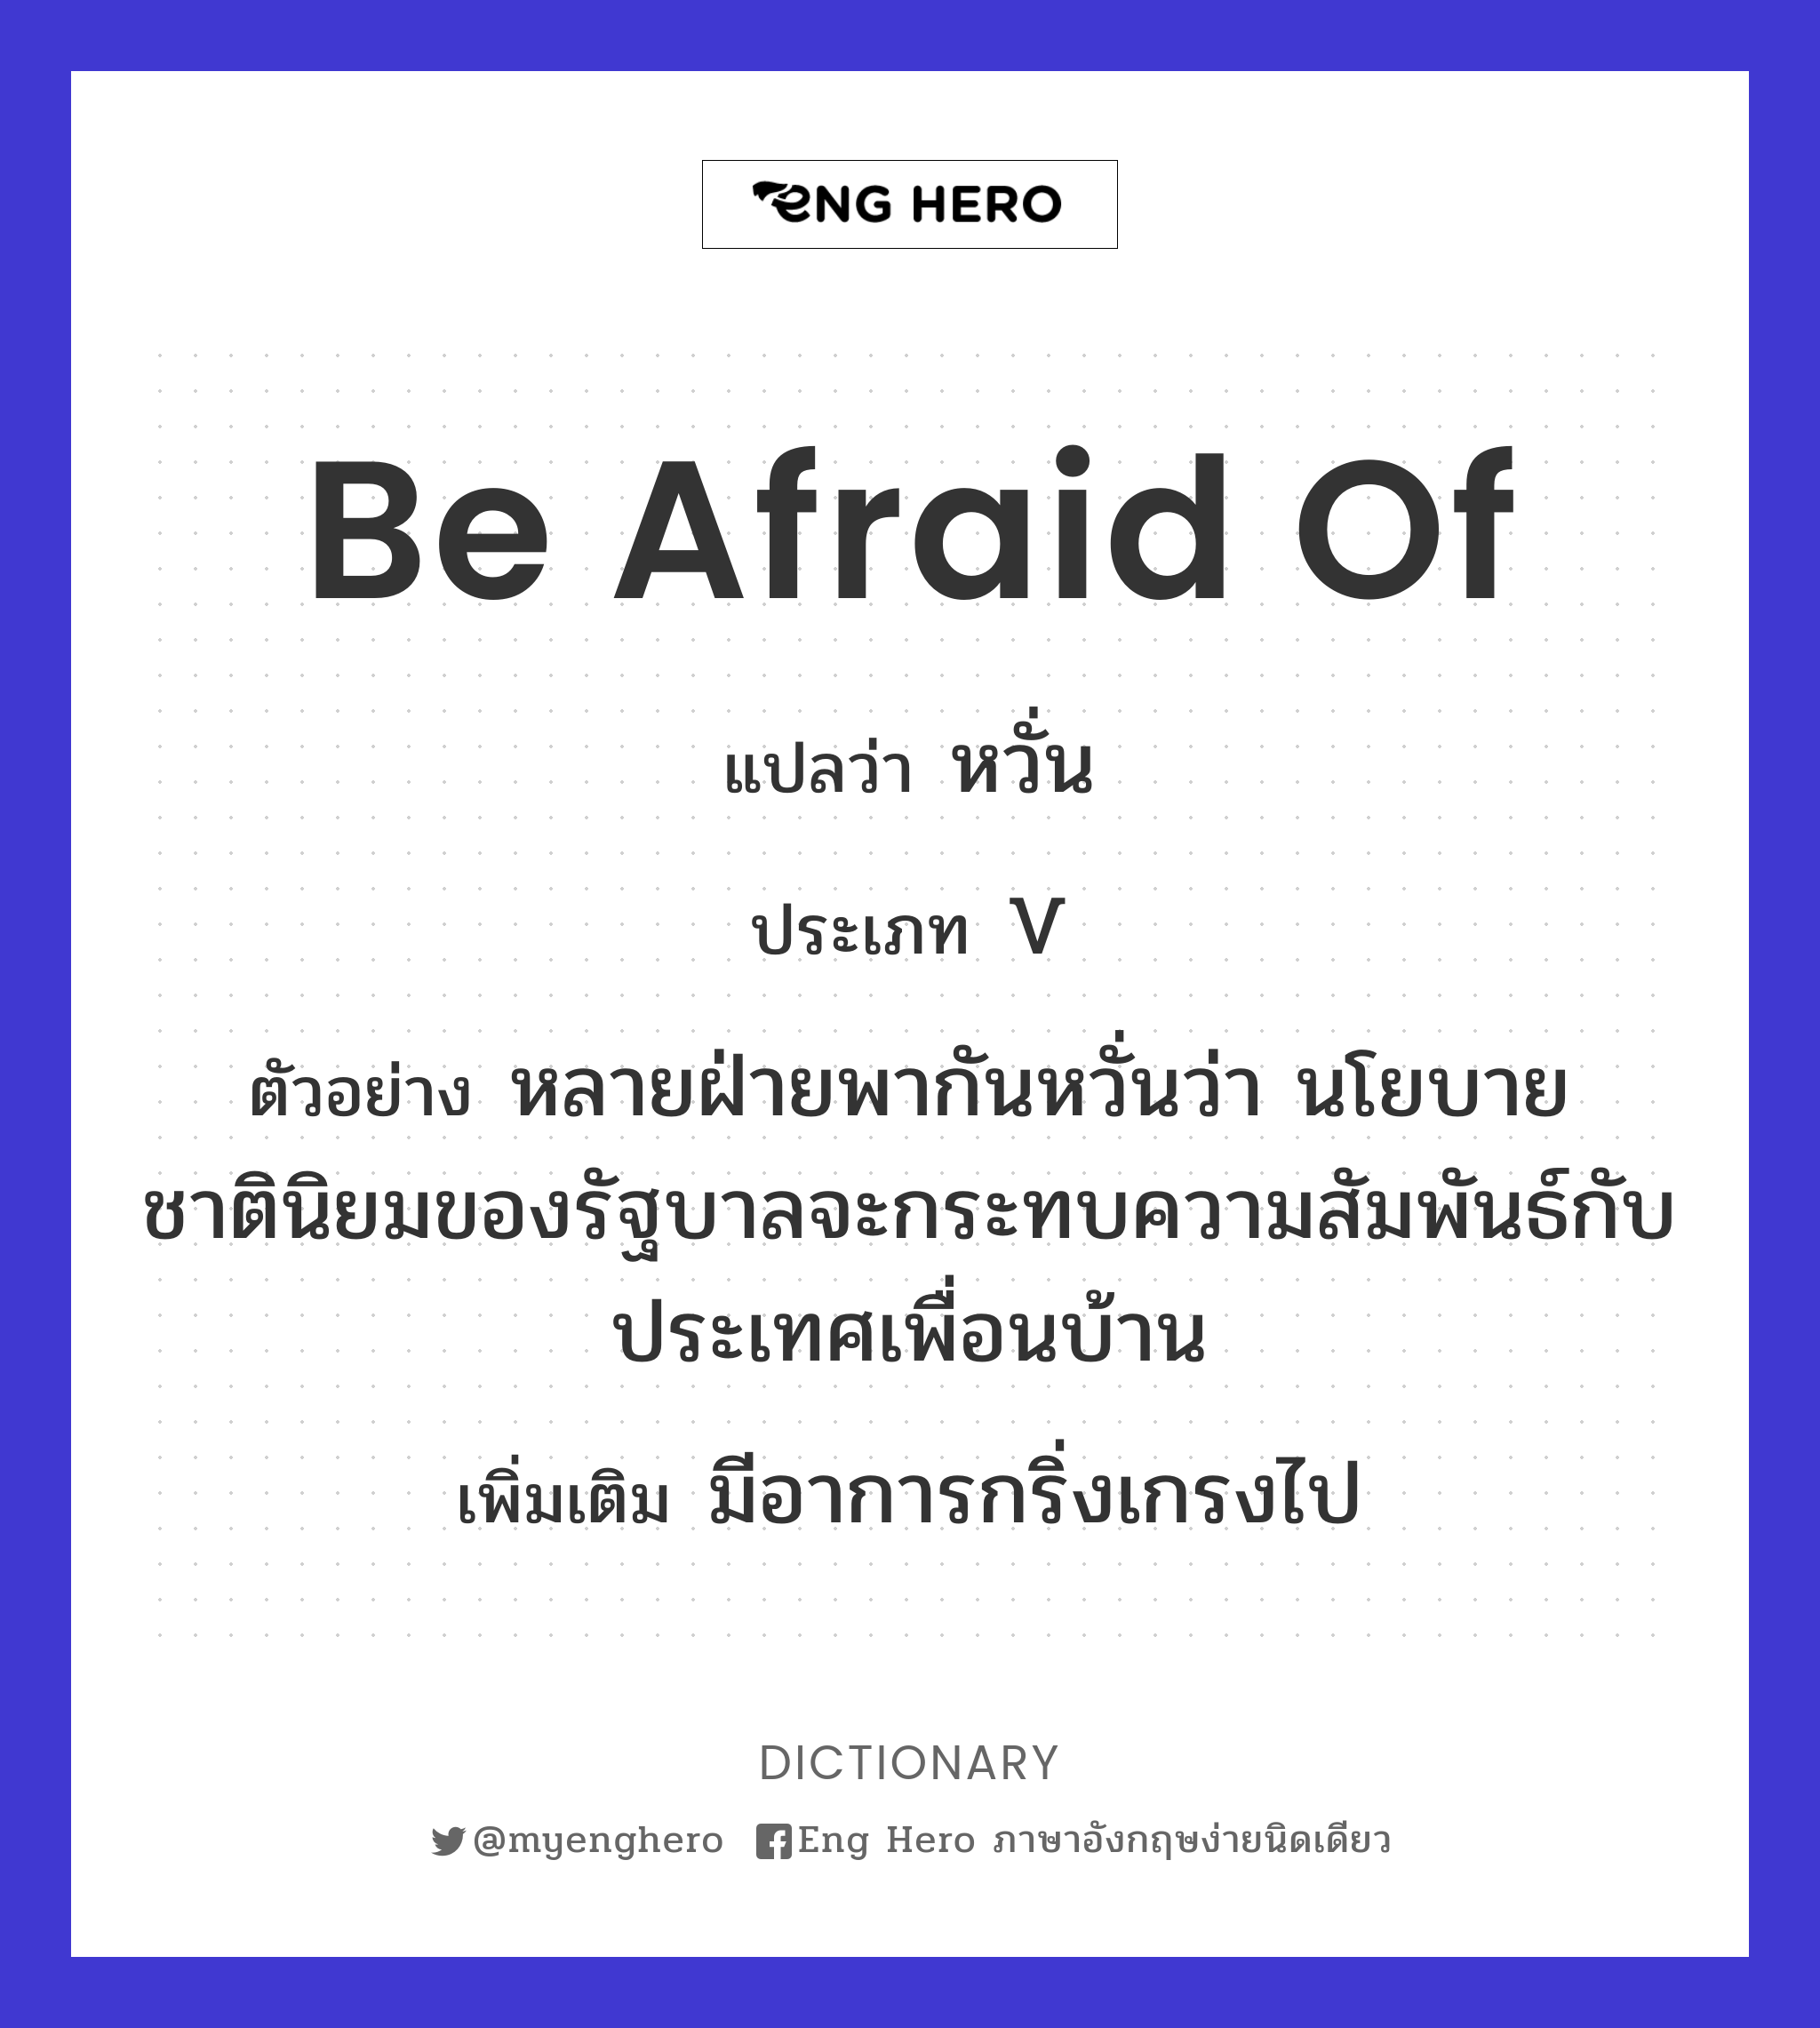 be afraid of